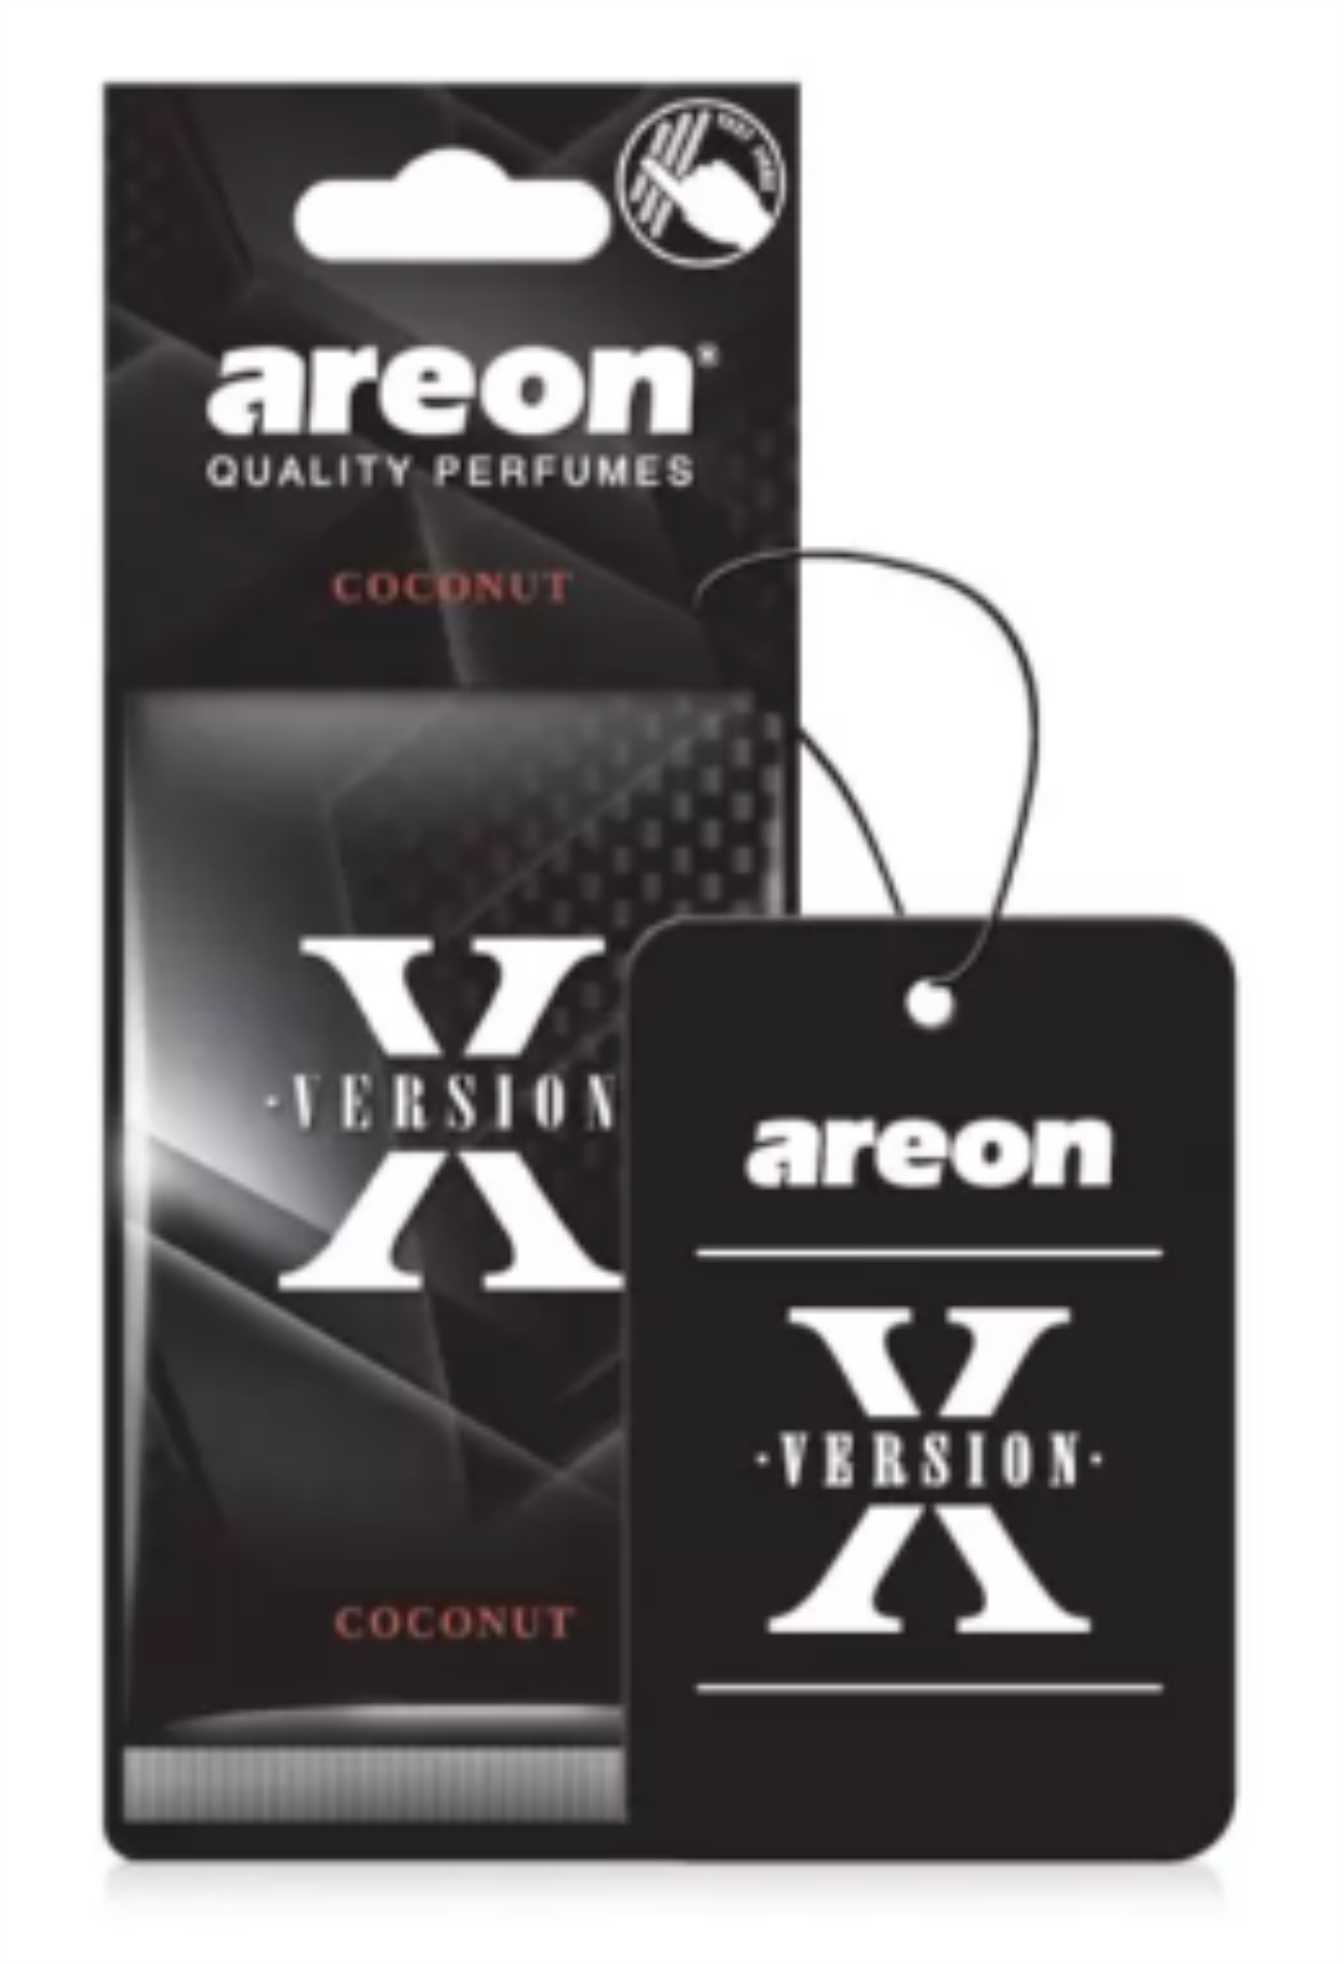 Mon Areon X Version Coconut